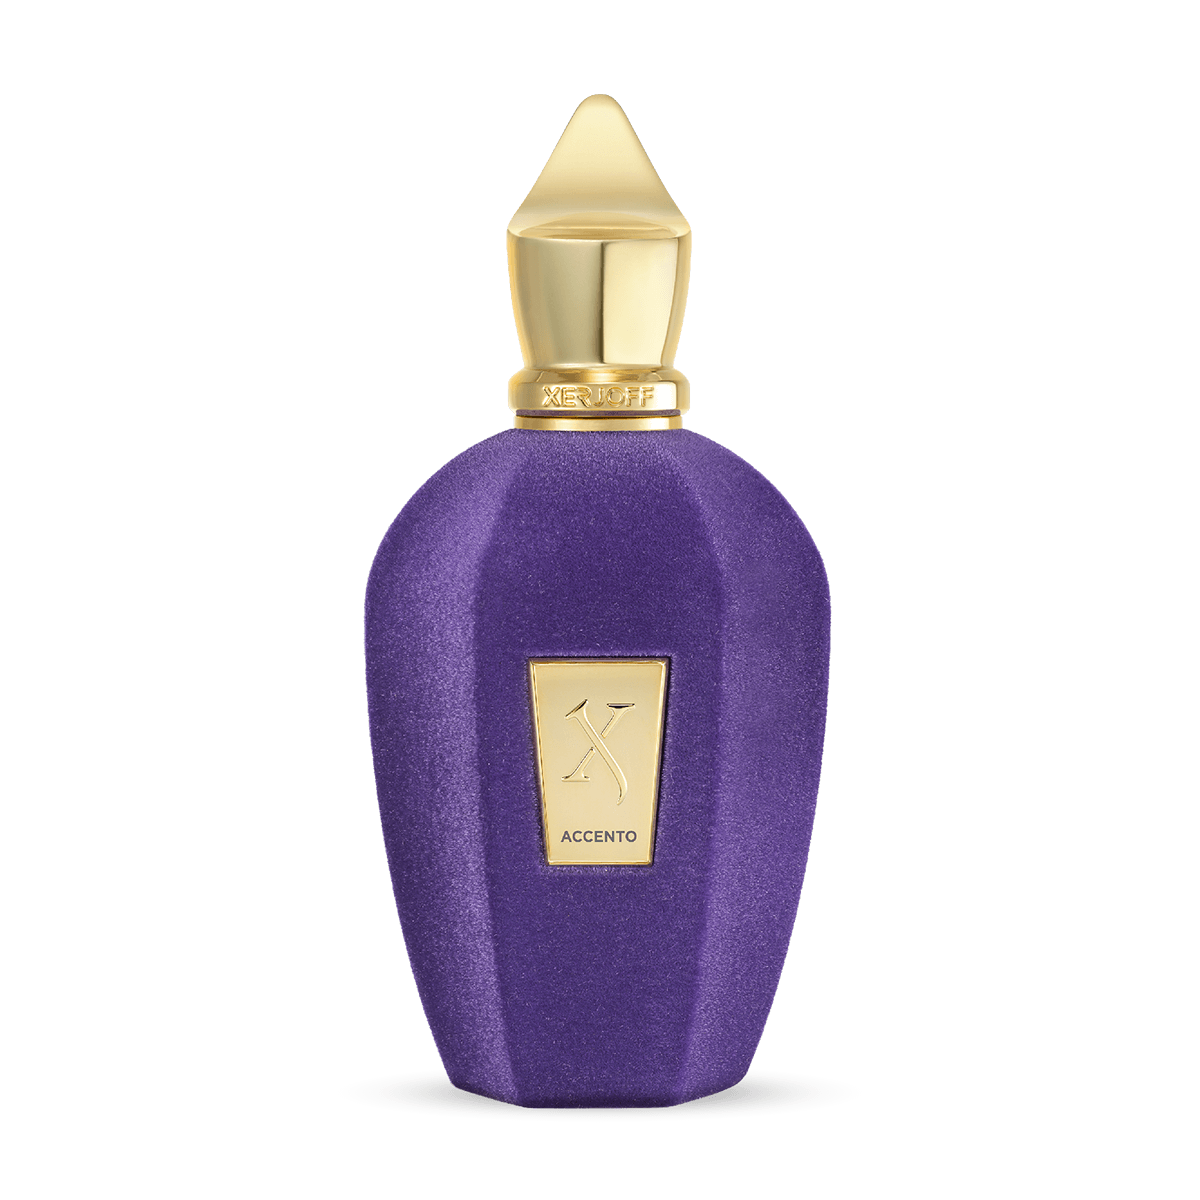 Accento Perfume, Italian Luxury Perfume